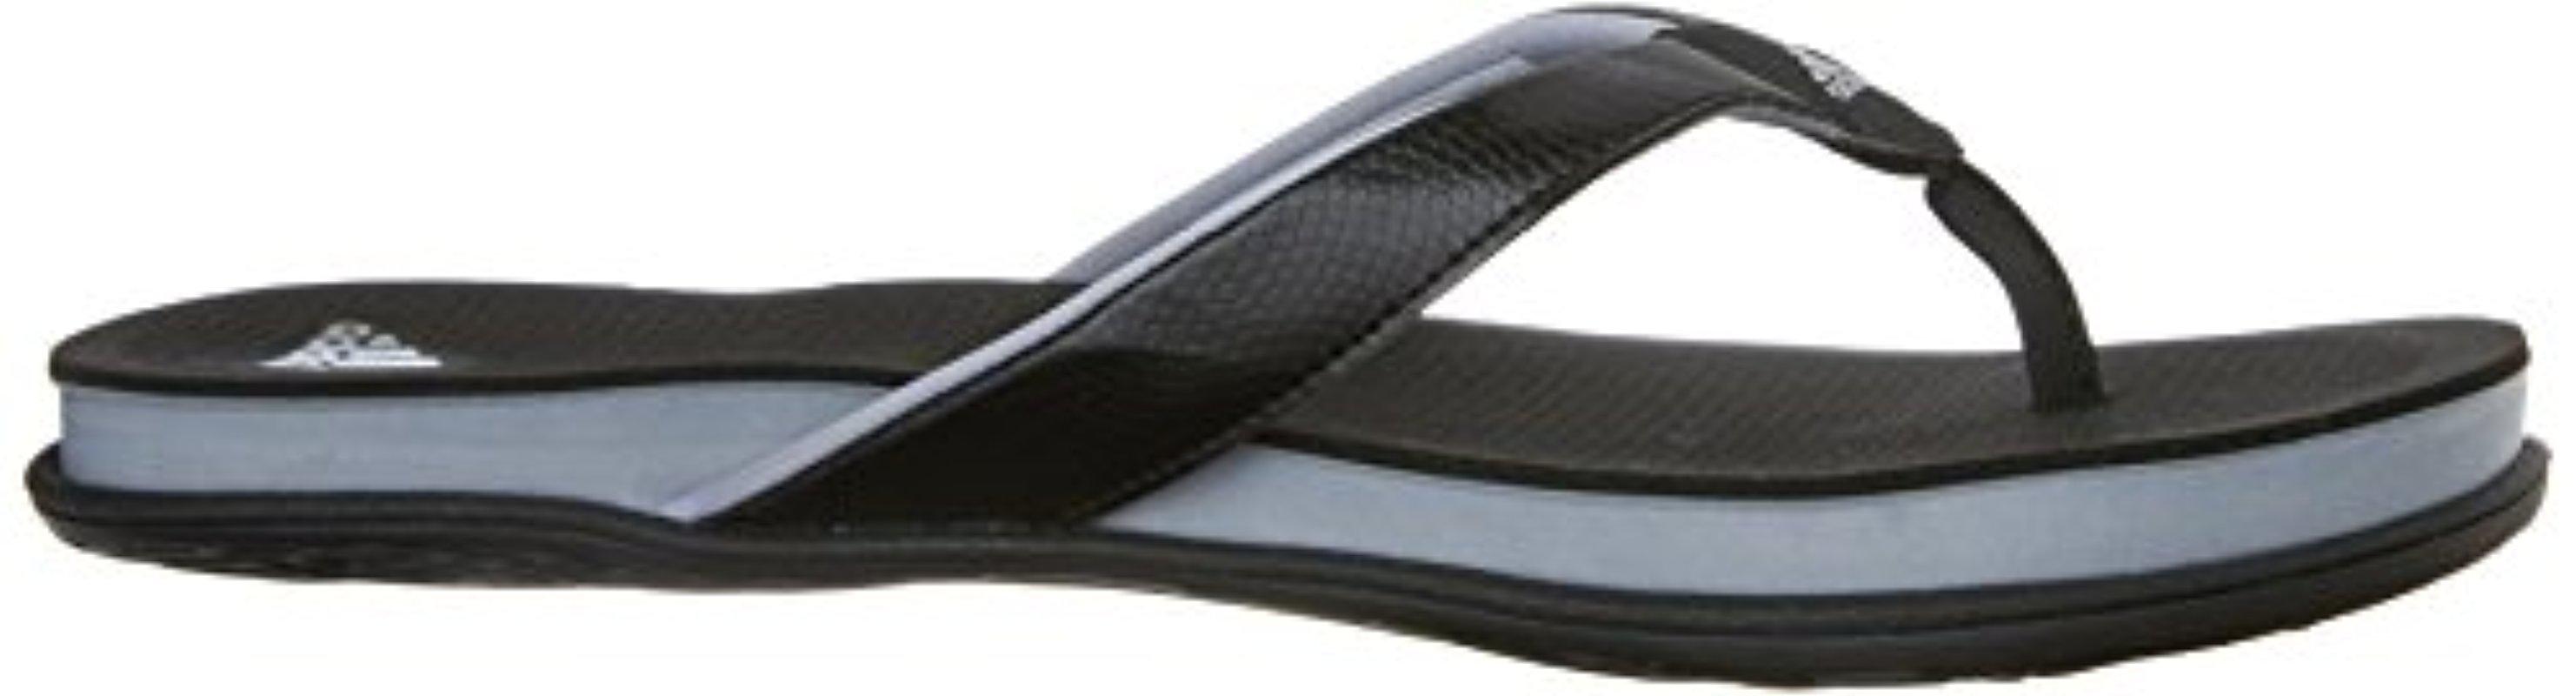 adidas Supercloud Plus Thong Athletic Slide Sandals in Black/Mid  Grey/Silver (Black) - Lyst